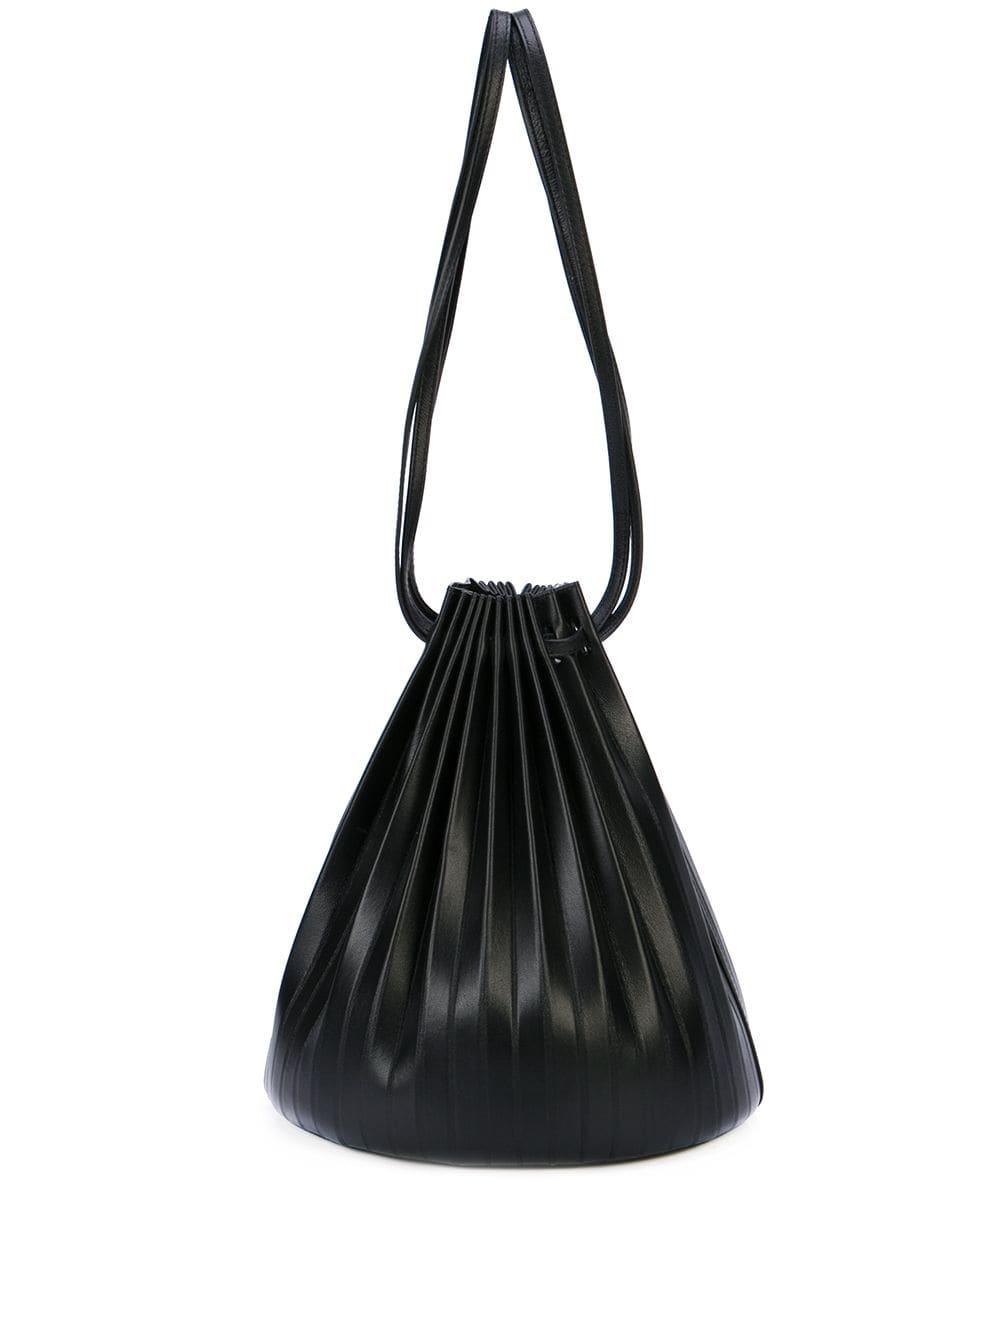 Mansur Gavriel Leather Pleated Bucket Bag in Black - Save 62% - Lyst